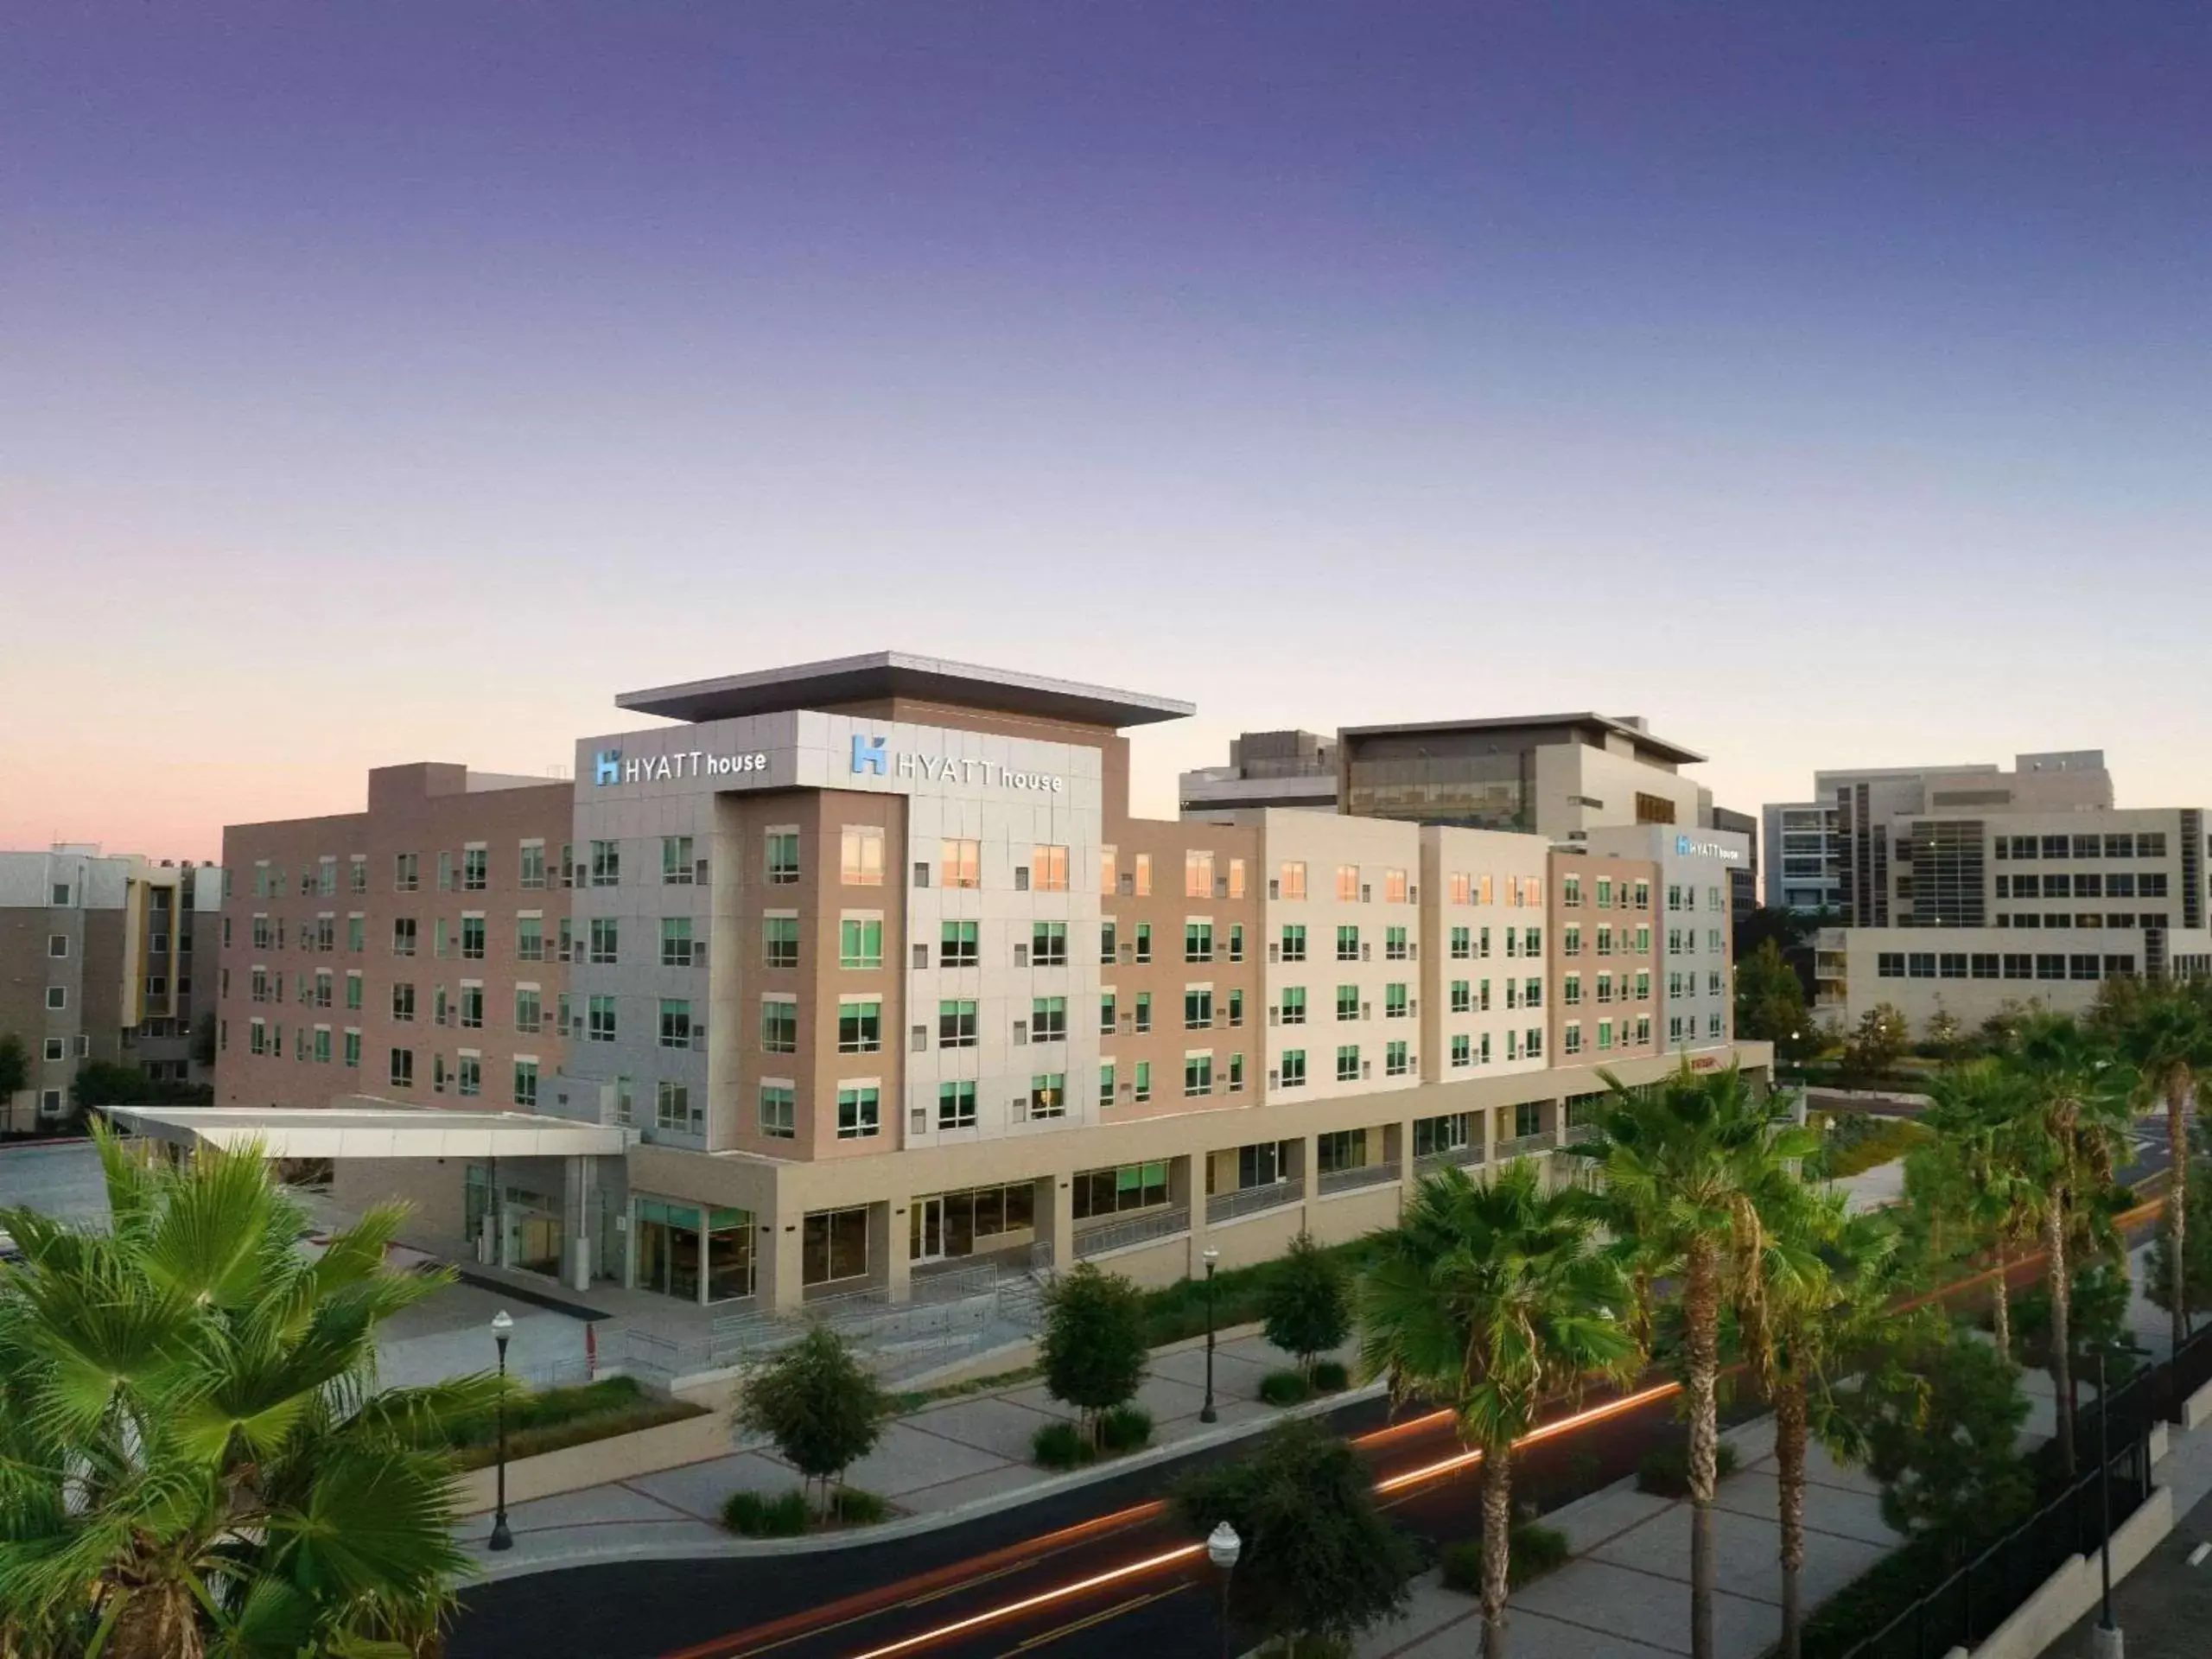 Property Building in Hyatt House LA - University Medical Center